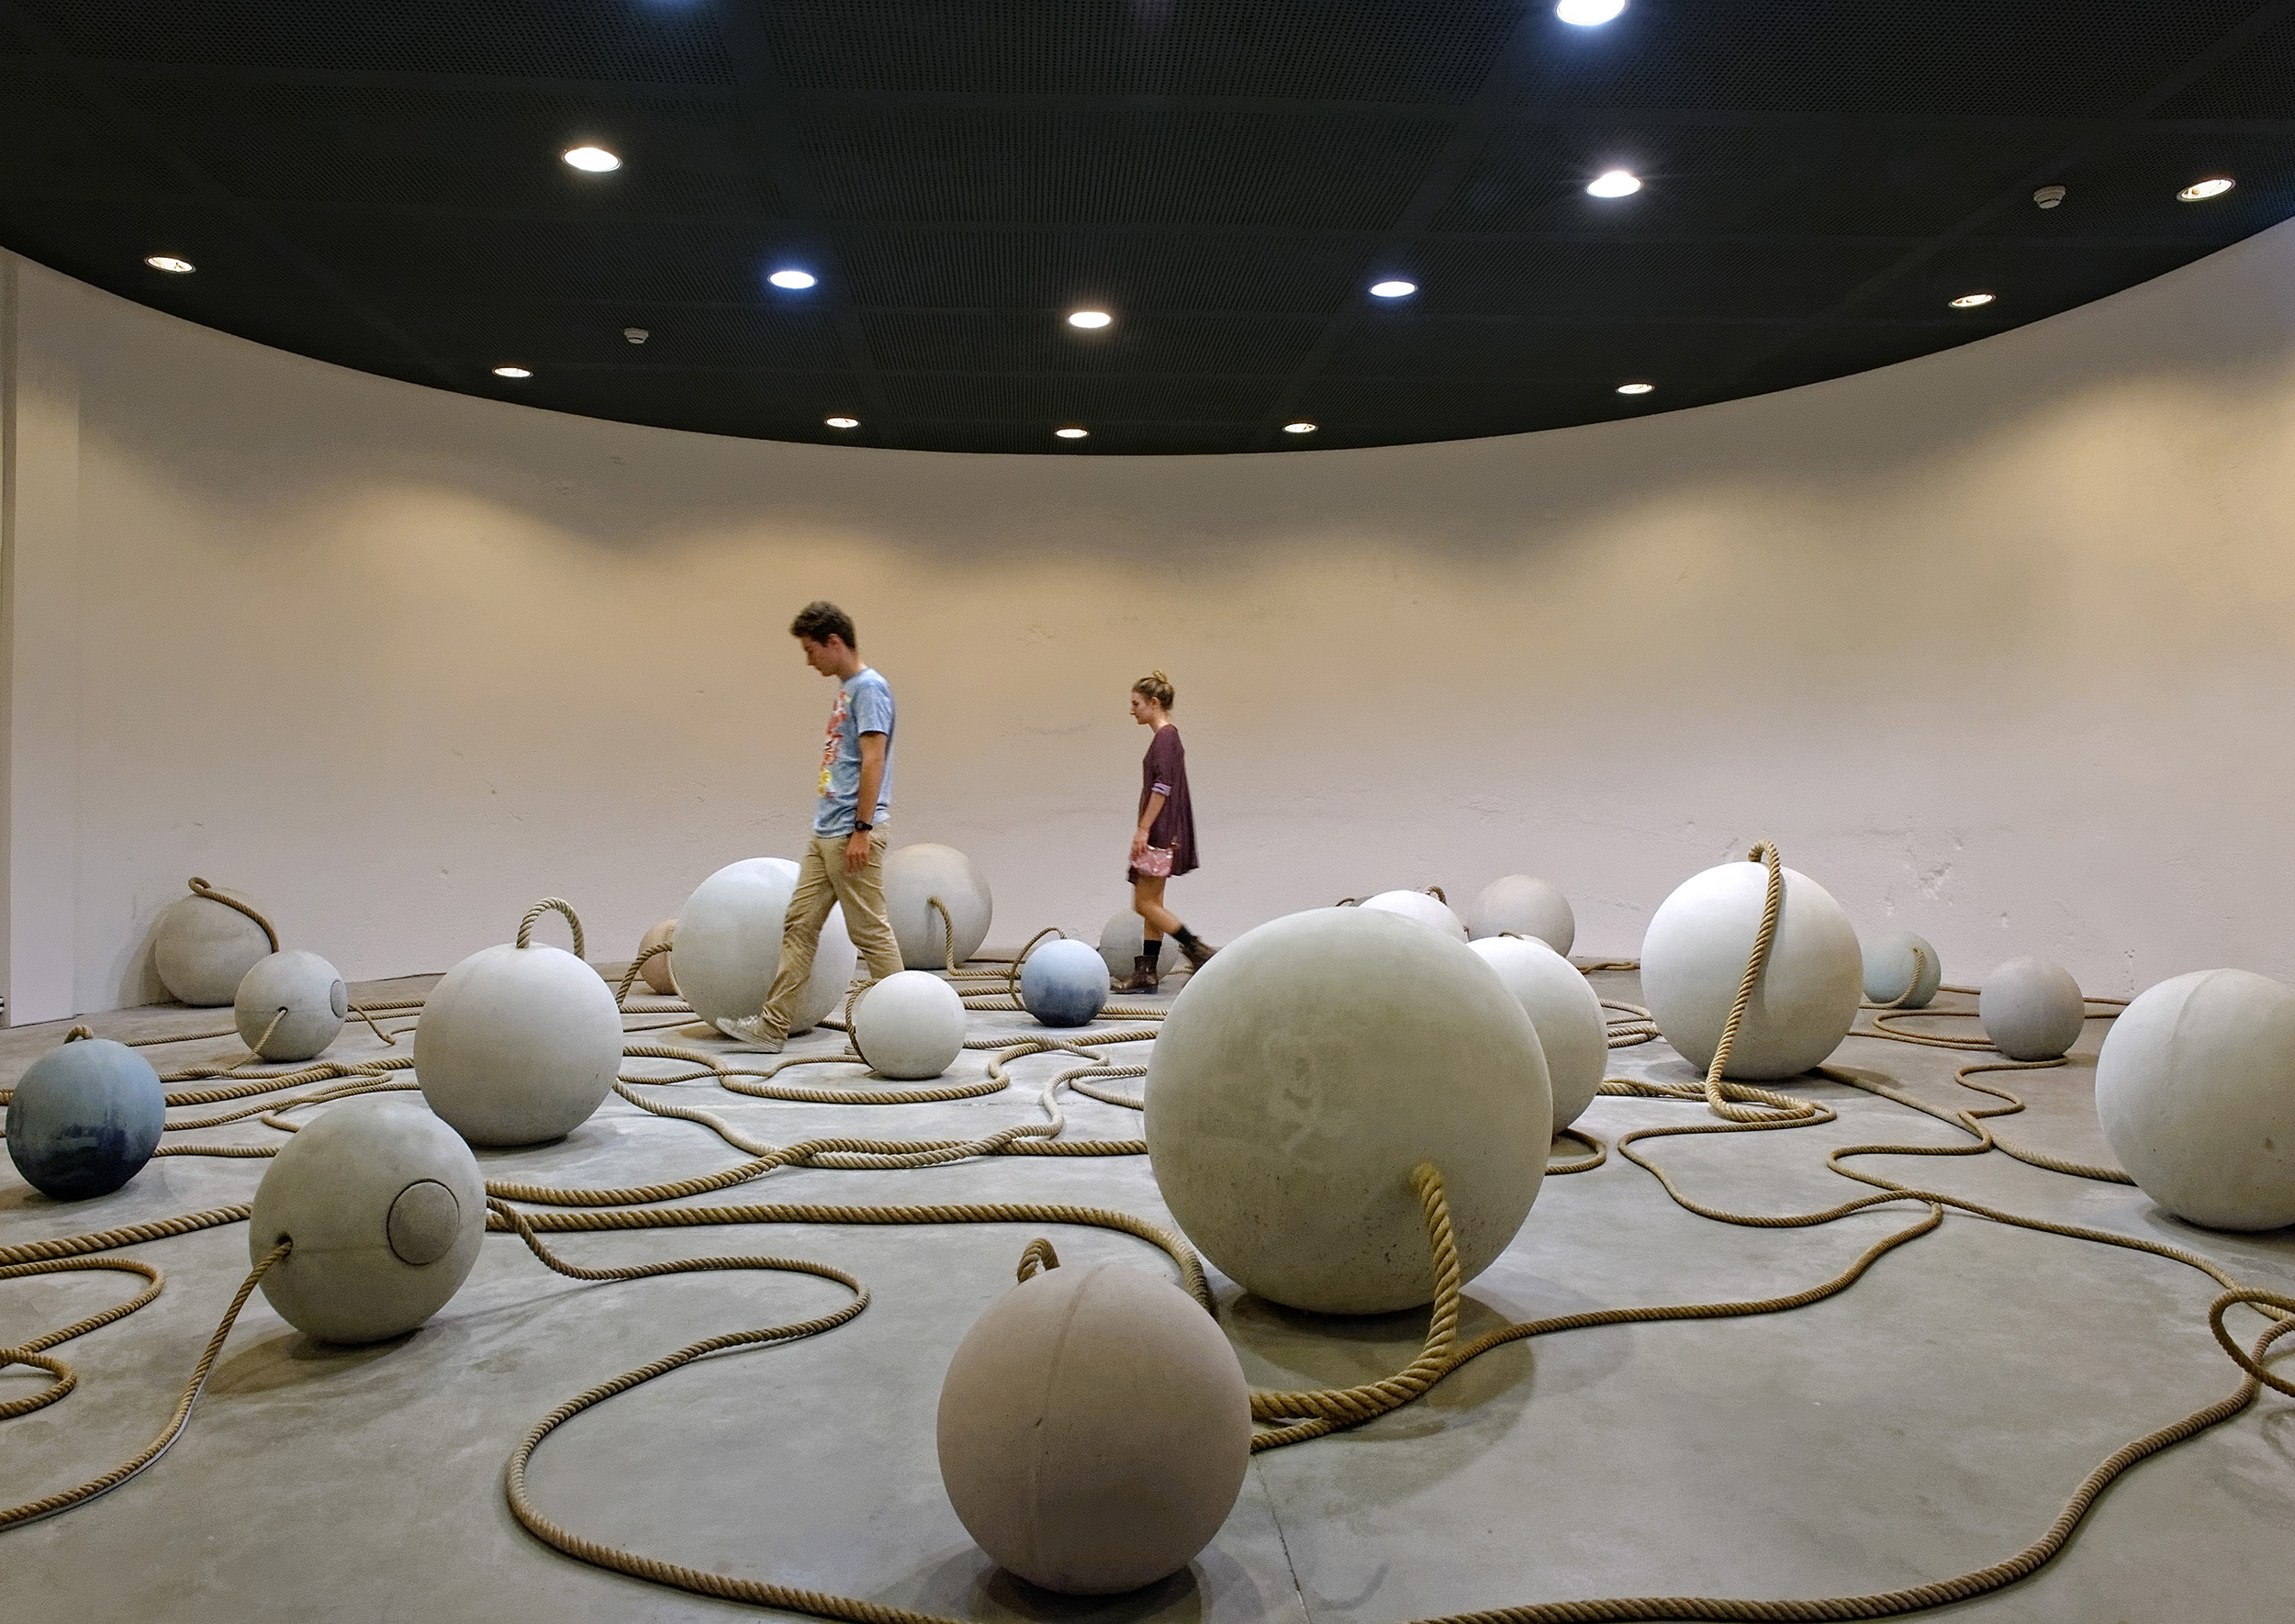 Otobong Nkanga, ‘Wetin You Go Do?,’ 2015. Concrete, dye, rope, speakers, sound, 10 minutes (loop). Installtion view of La vie modern at the Musée d’artcontemporain, 2015. Photo: Blaise Adilon